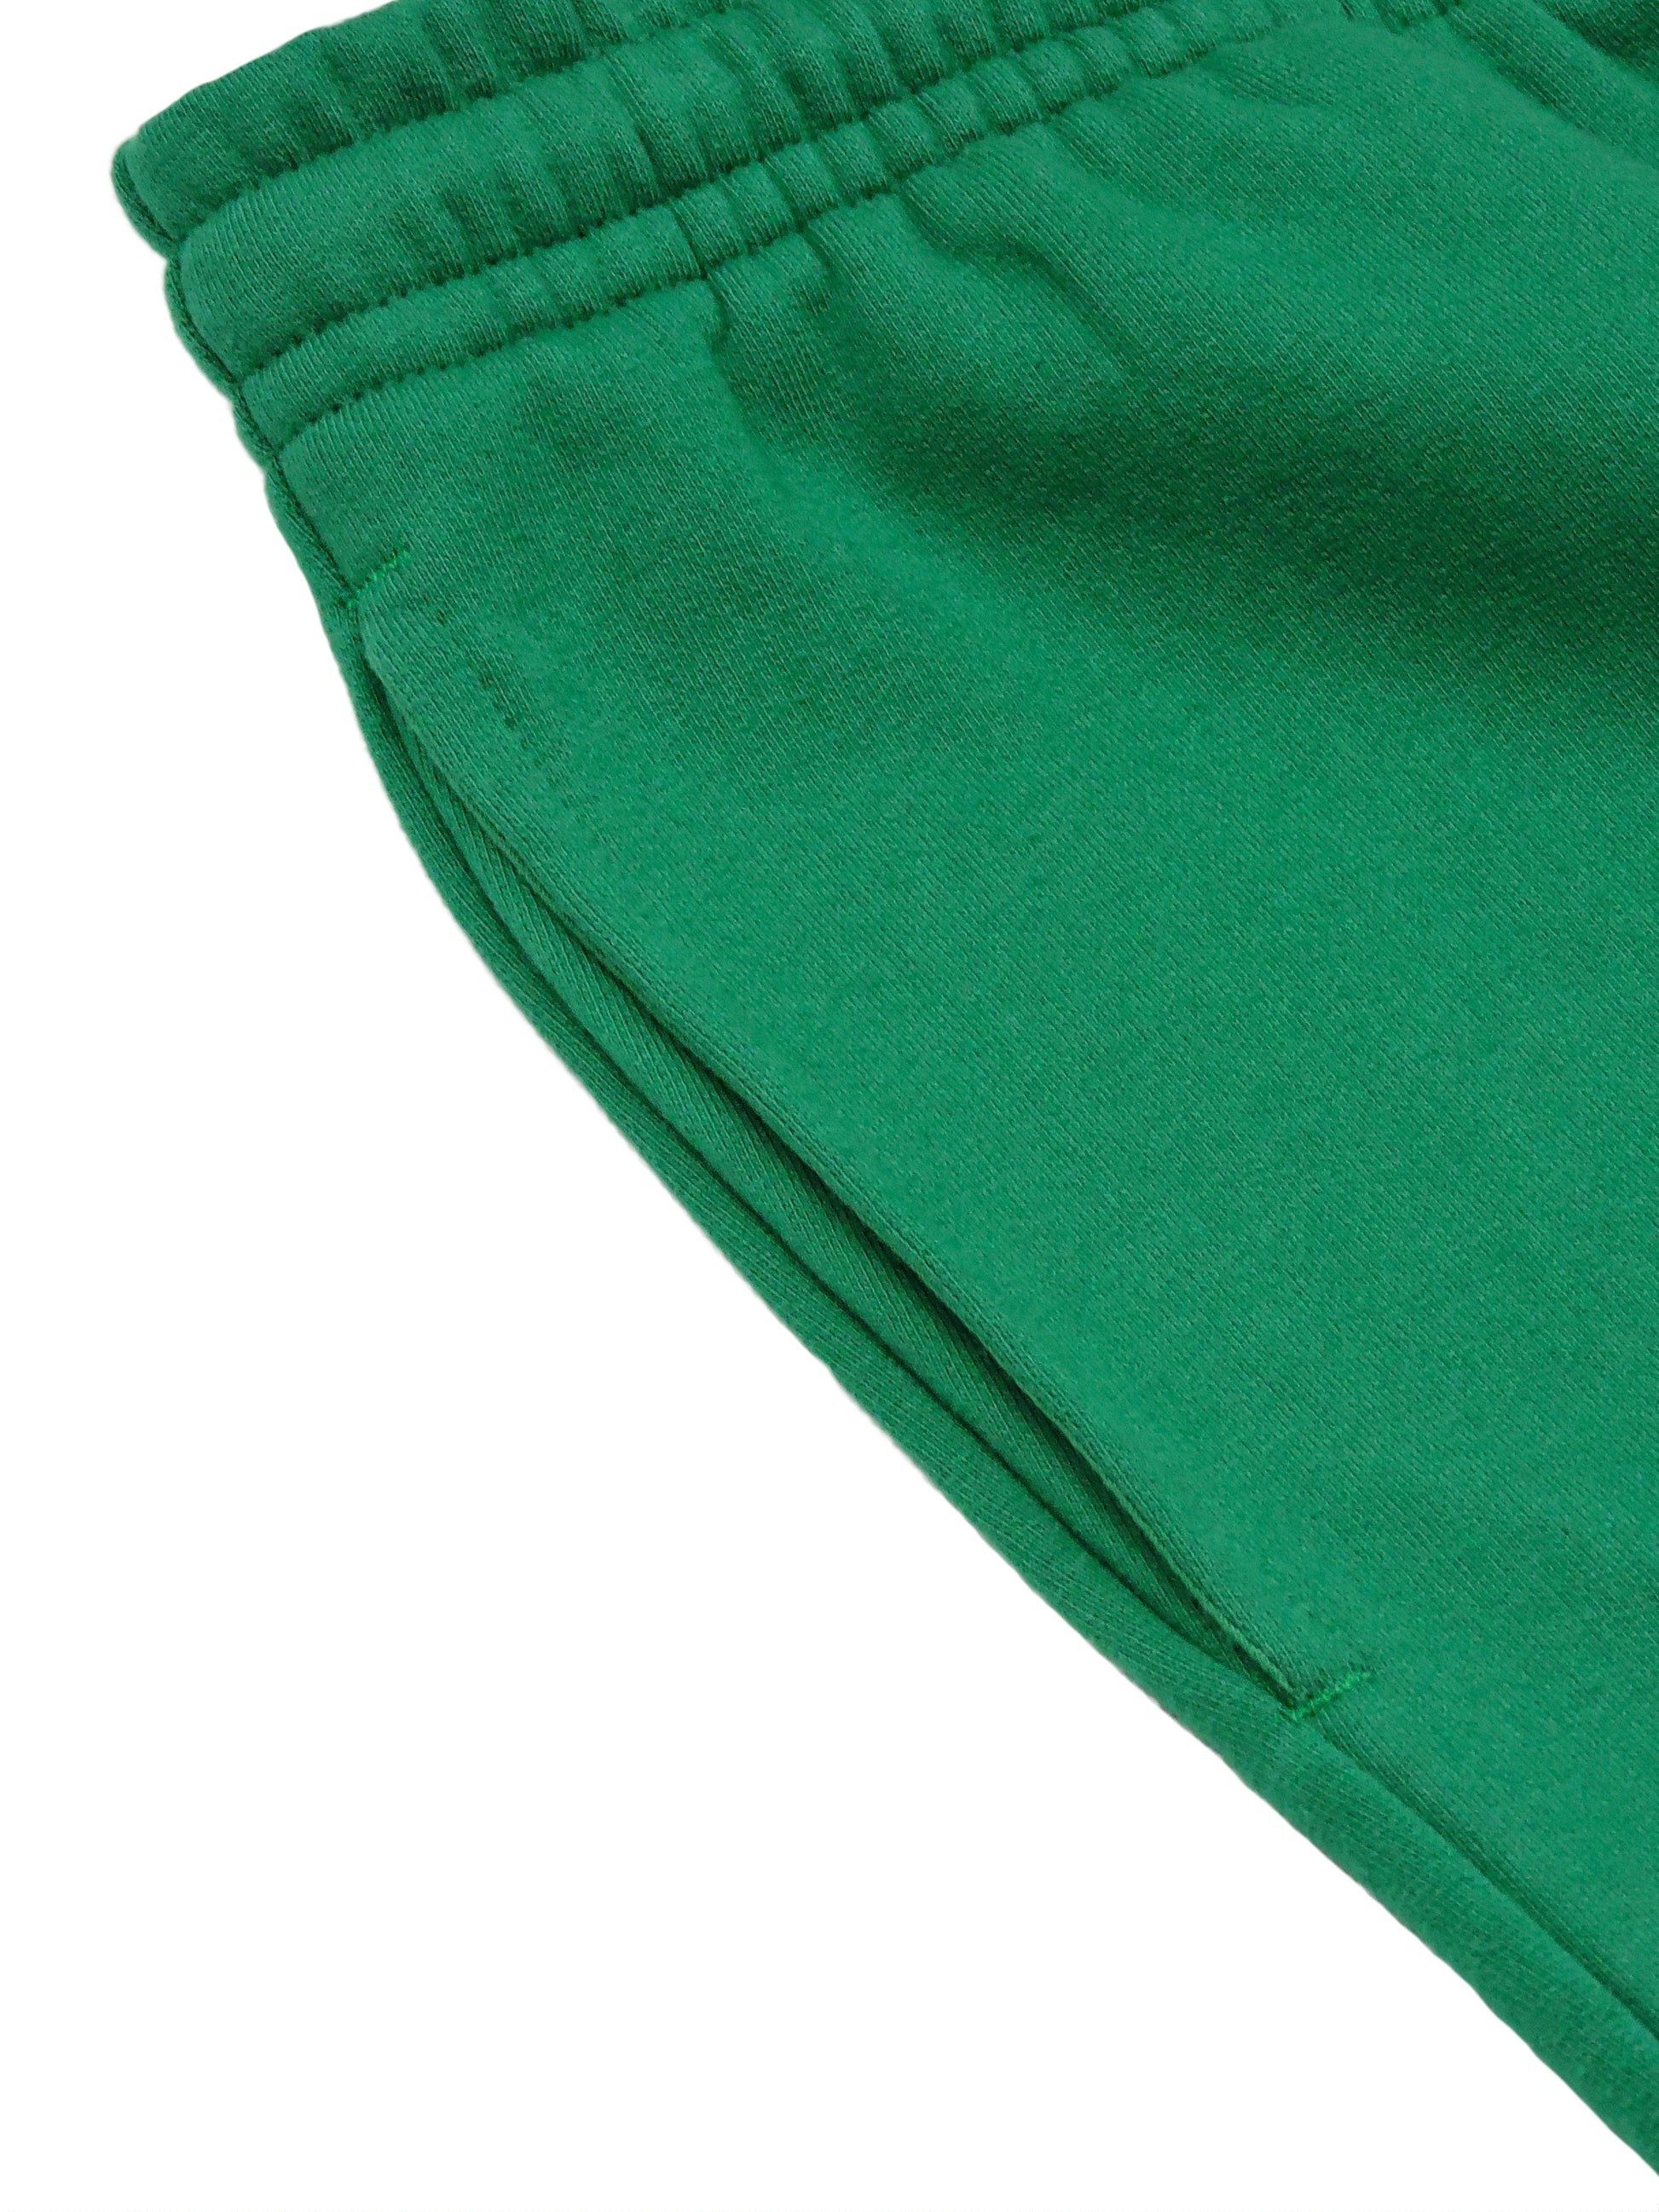 Flirtitude Green Active Pants Size M - 47% off